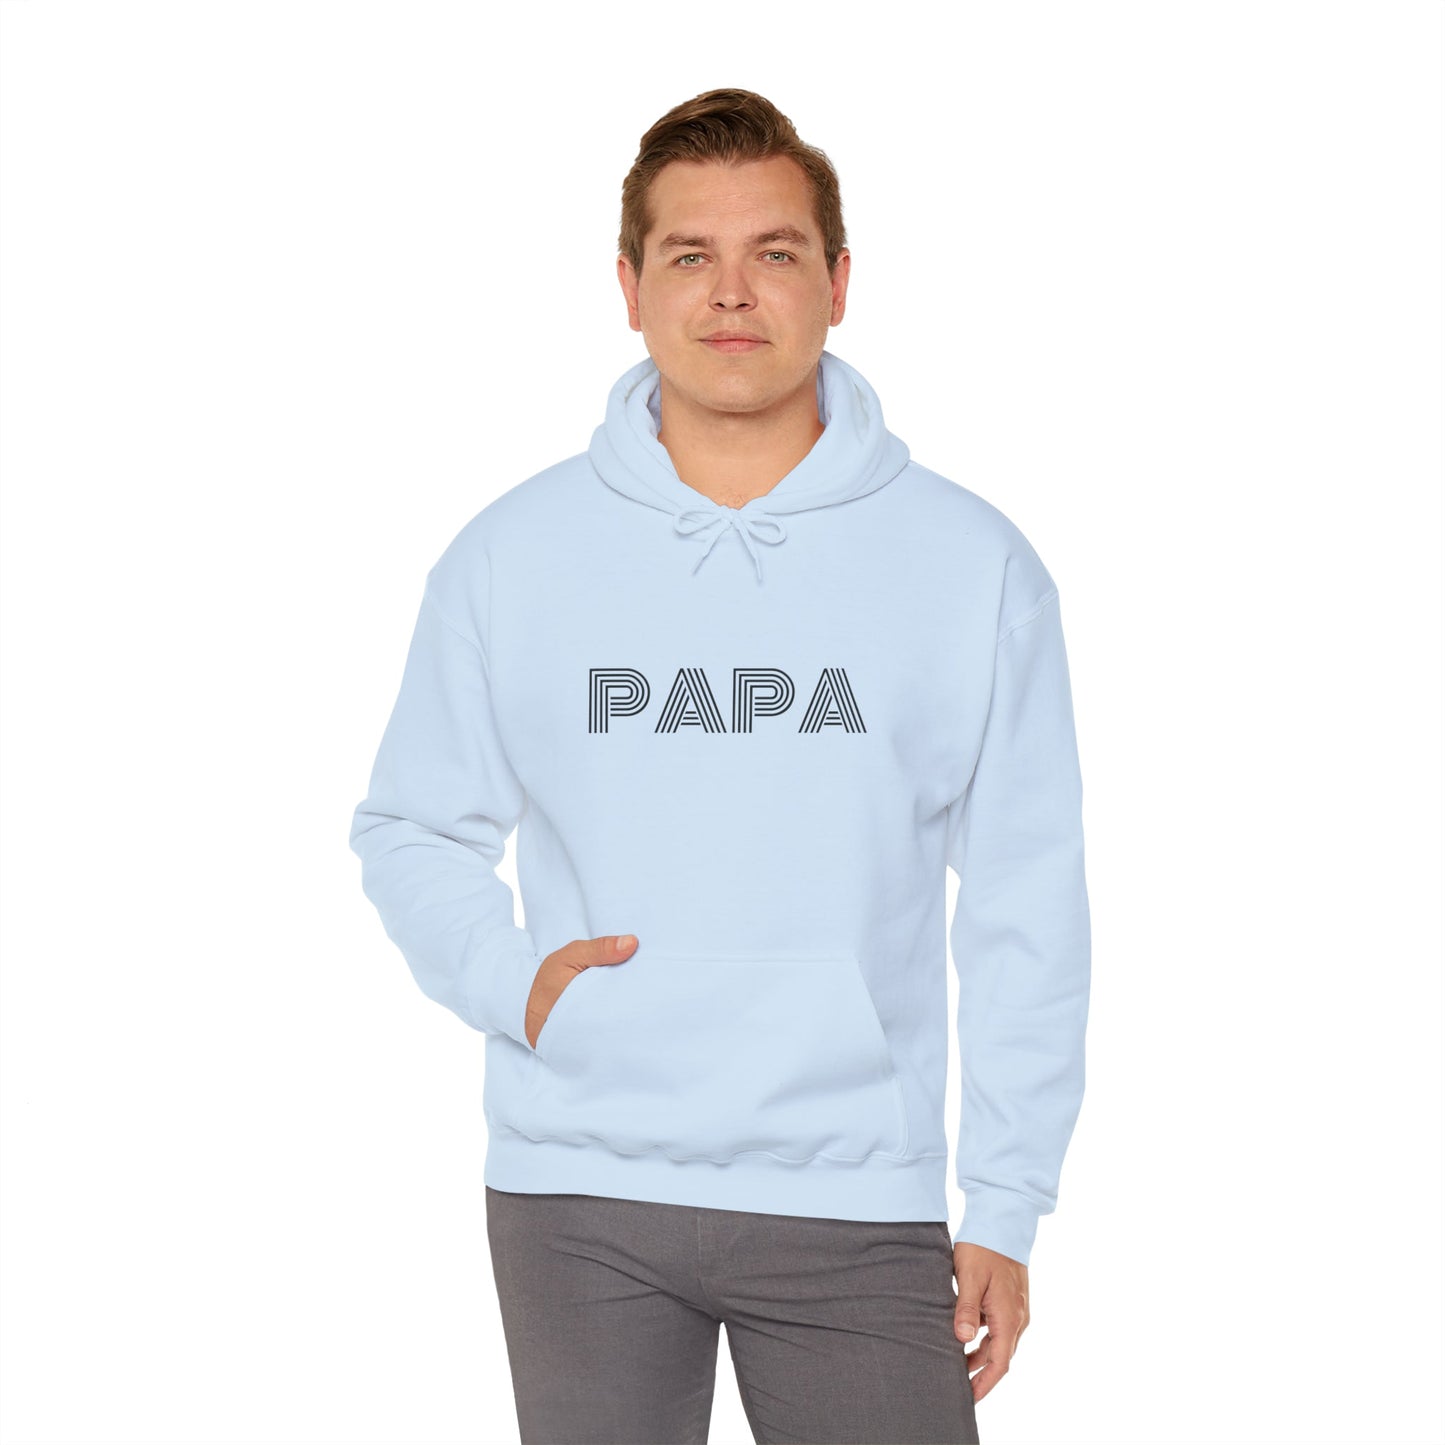 Papa Graphic Print Unisex Hooded Sweatshirt